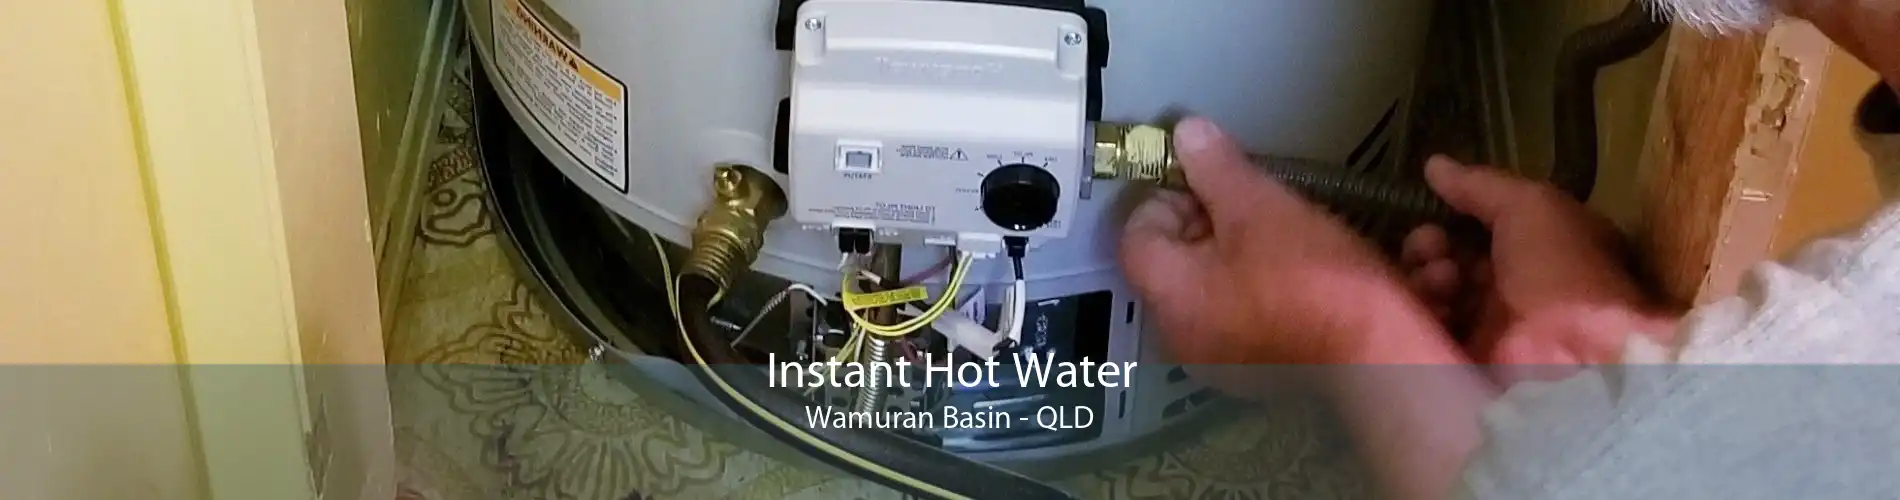 Instant Hot Water Wamuran Basin - QLD